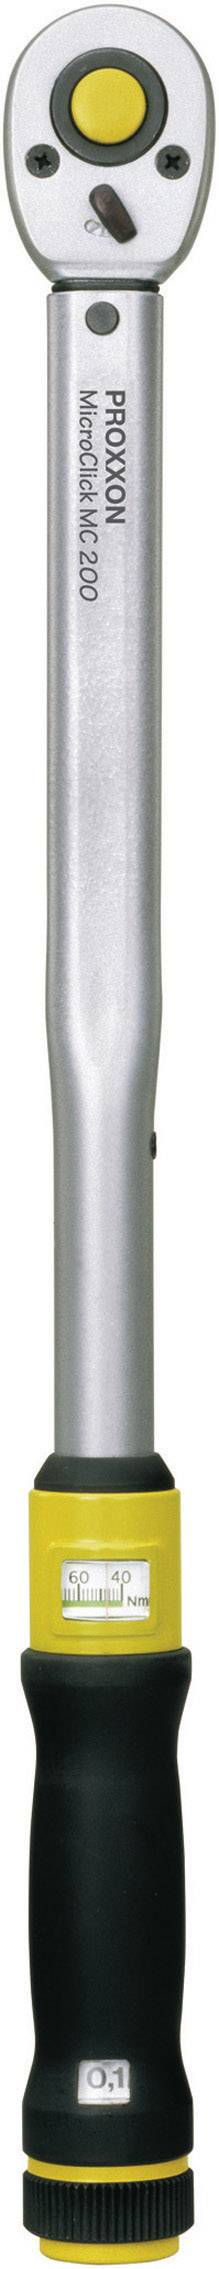 PROXXON Drehmomentschlüssel mit Umschaltknarre 1/2\" (12.5 mm) 40 - 200 Nm Proxxon Industrial MicroCl